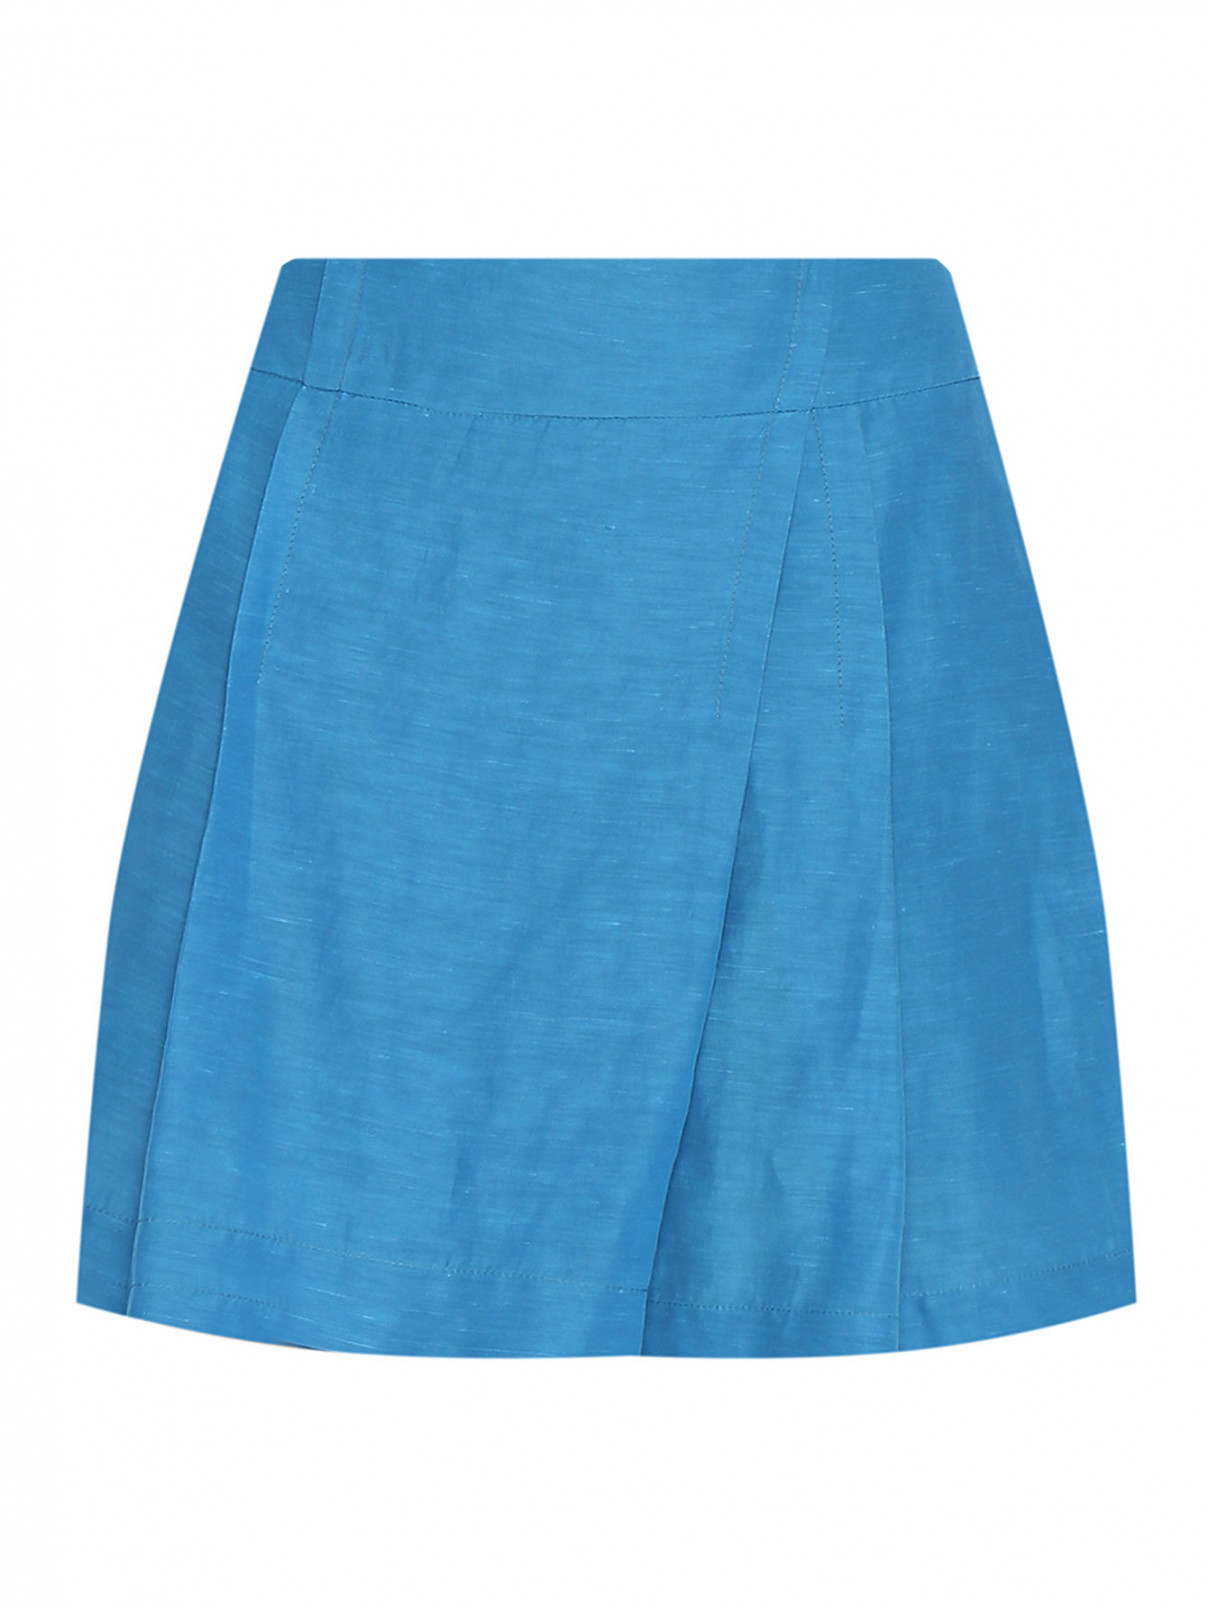 Однотонные юбка-шорты Alberta Ferretti  –  Общий вид  – Цвет:  Синий